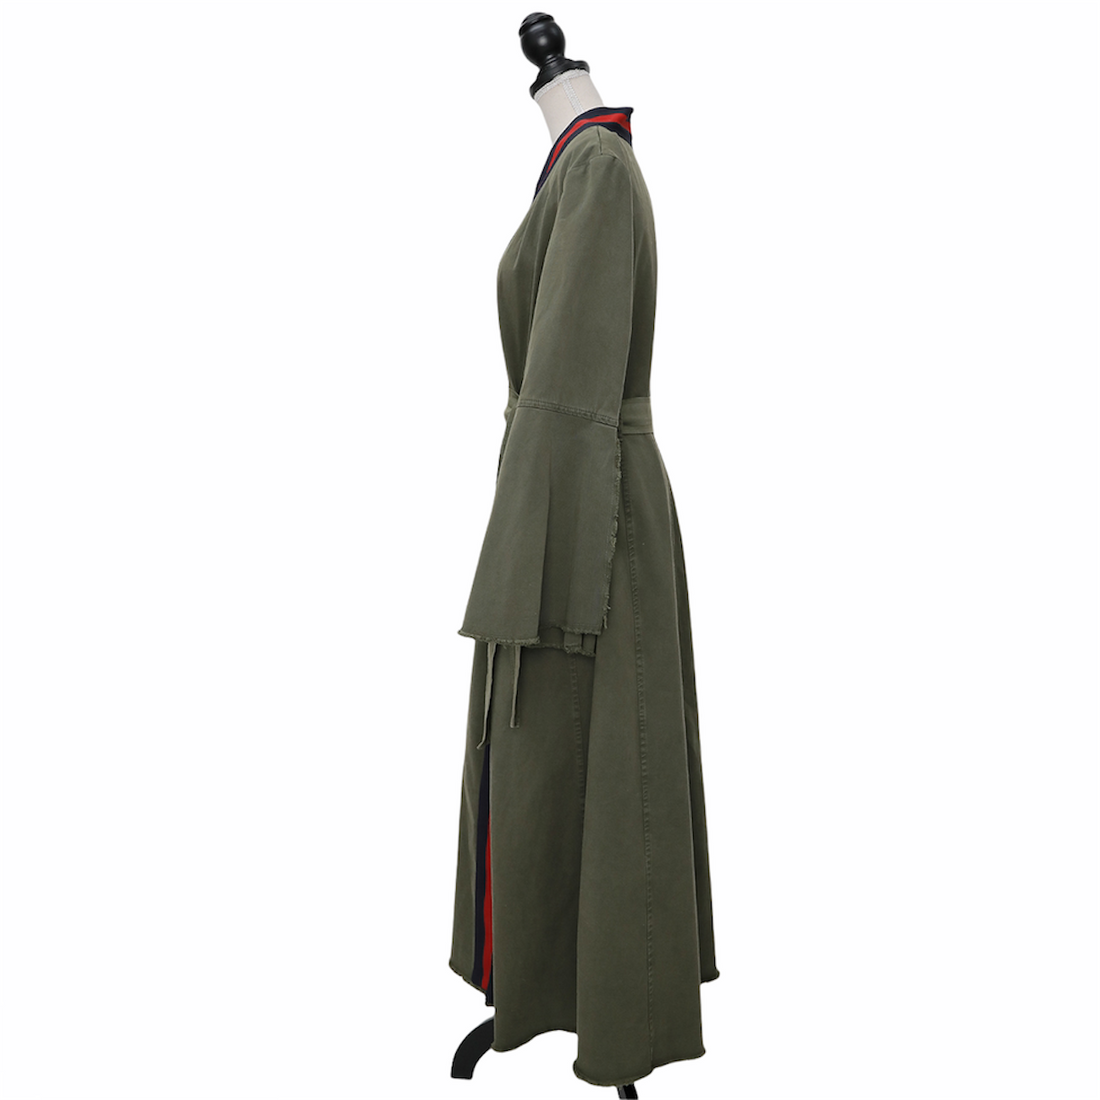 Bazar Deluxe military style coat